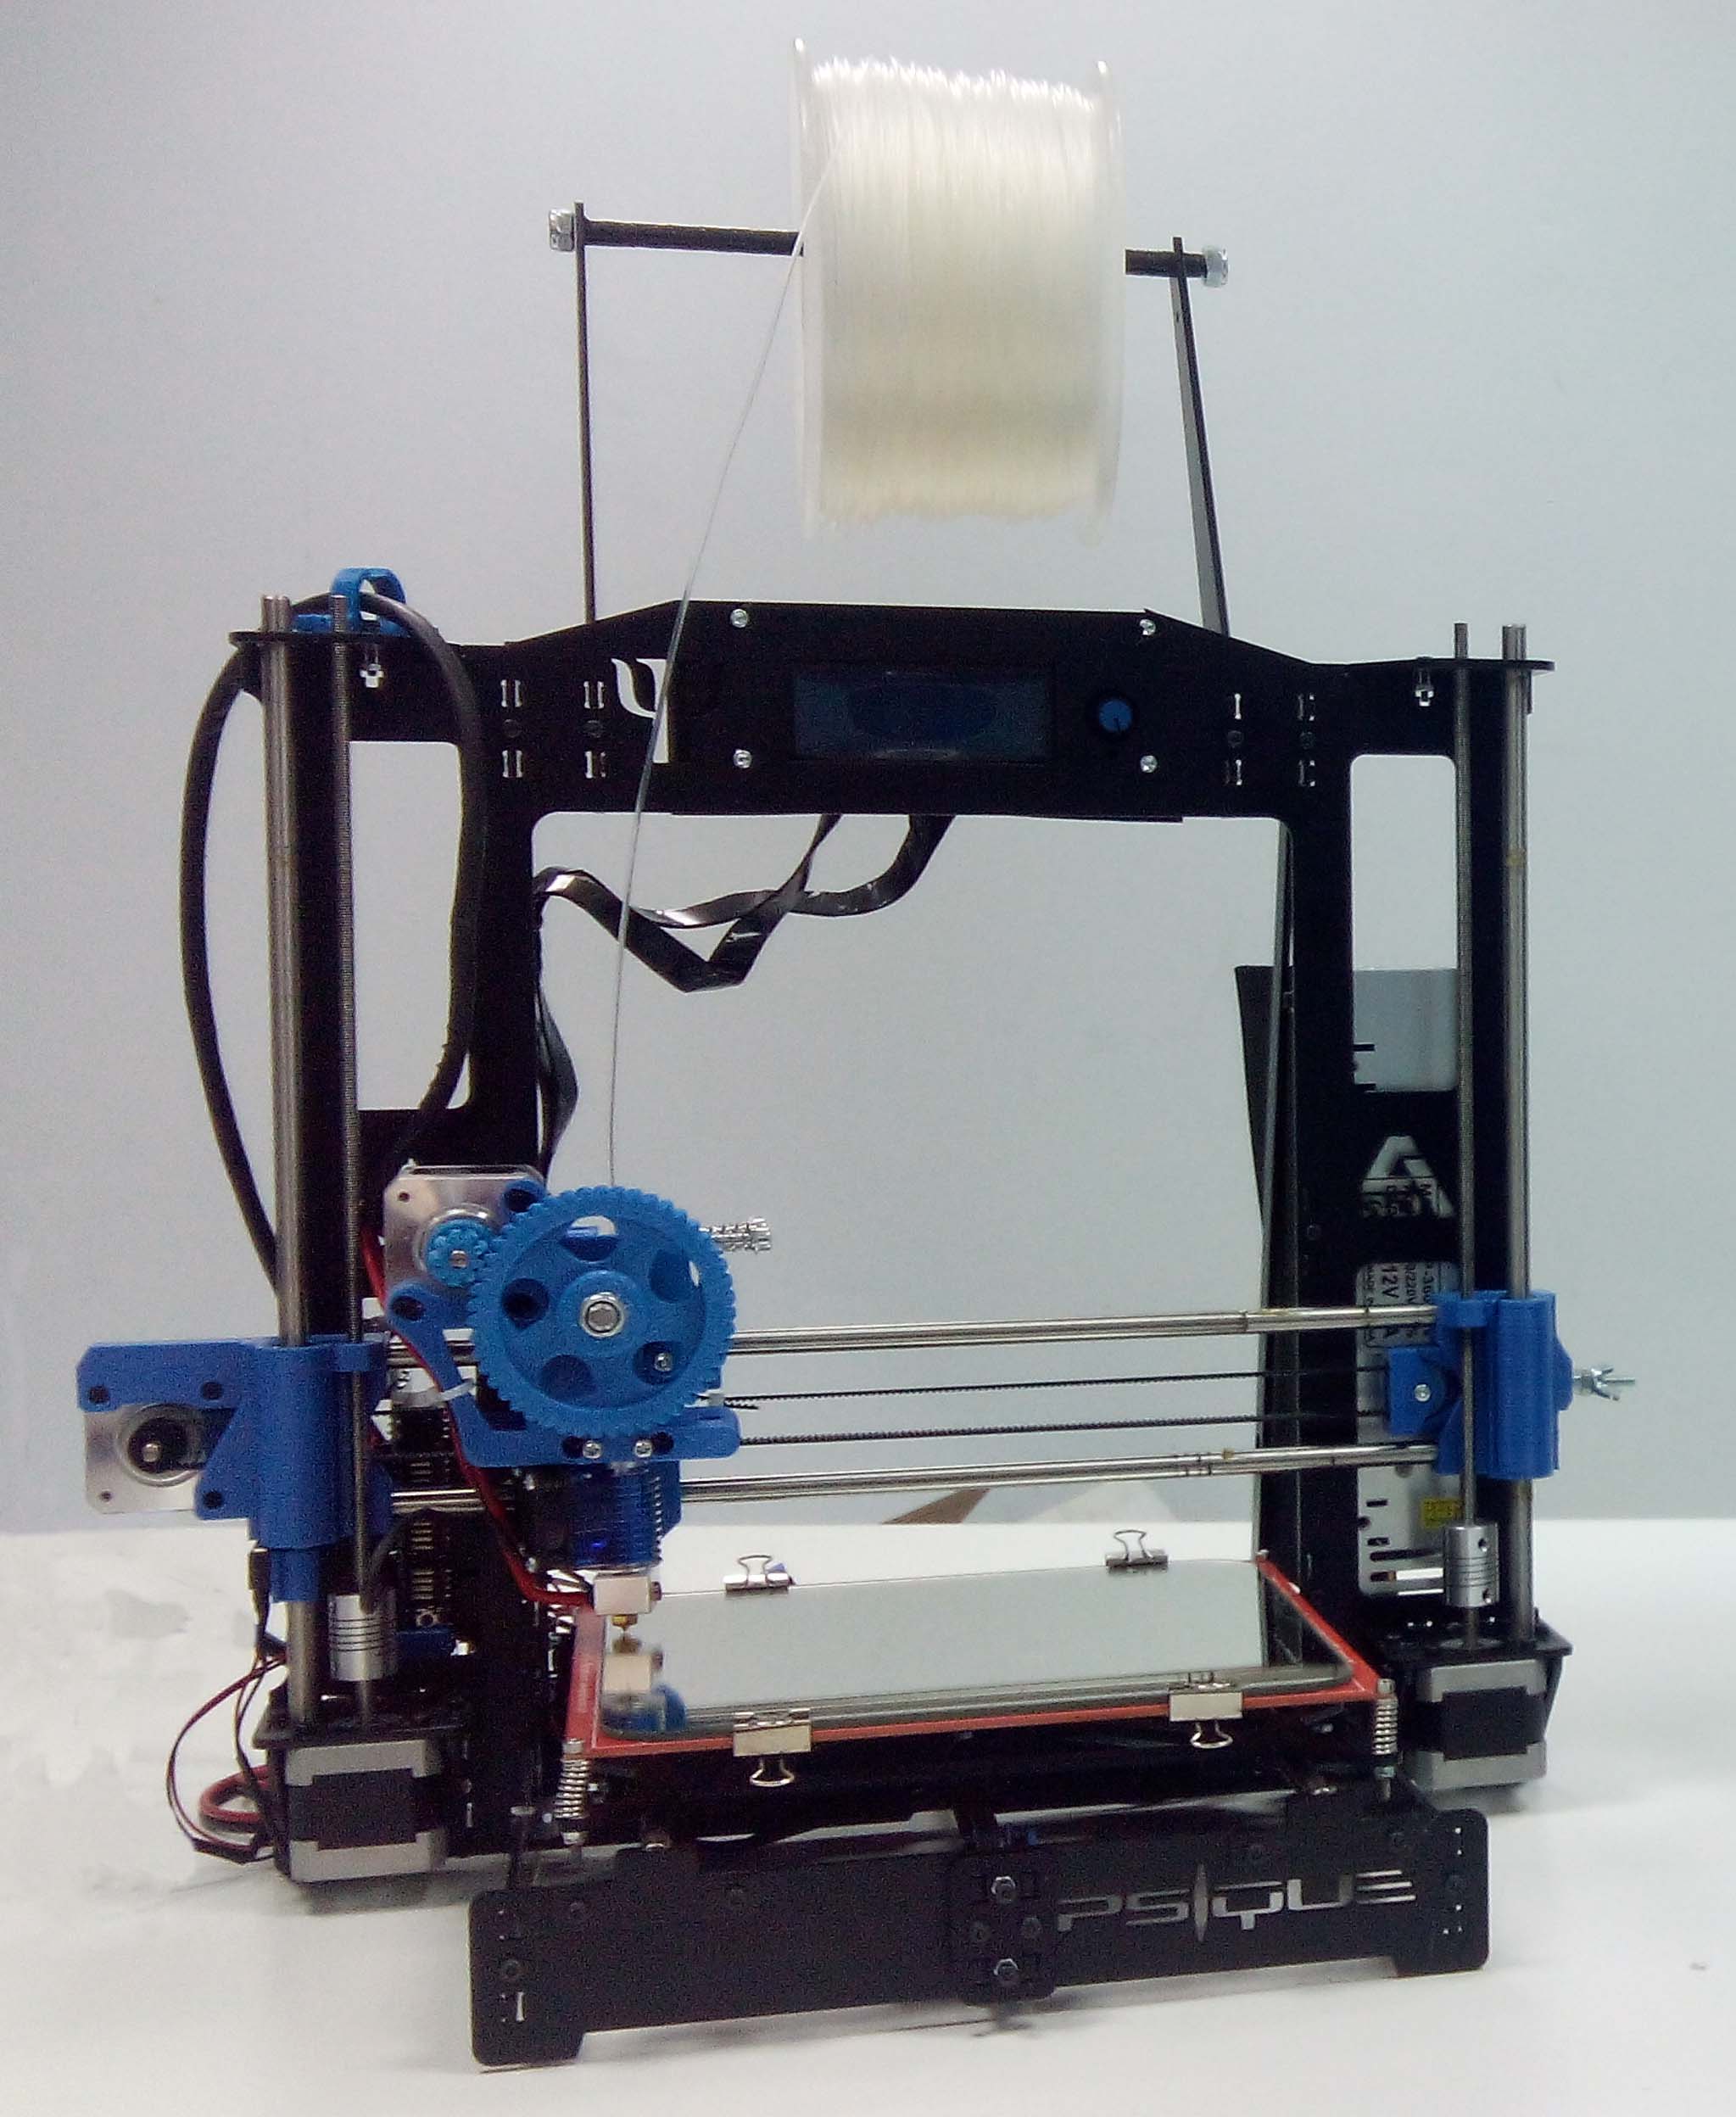 impresora 3D prensa y eventos 2014